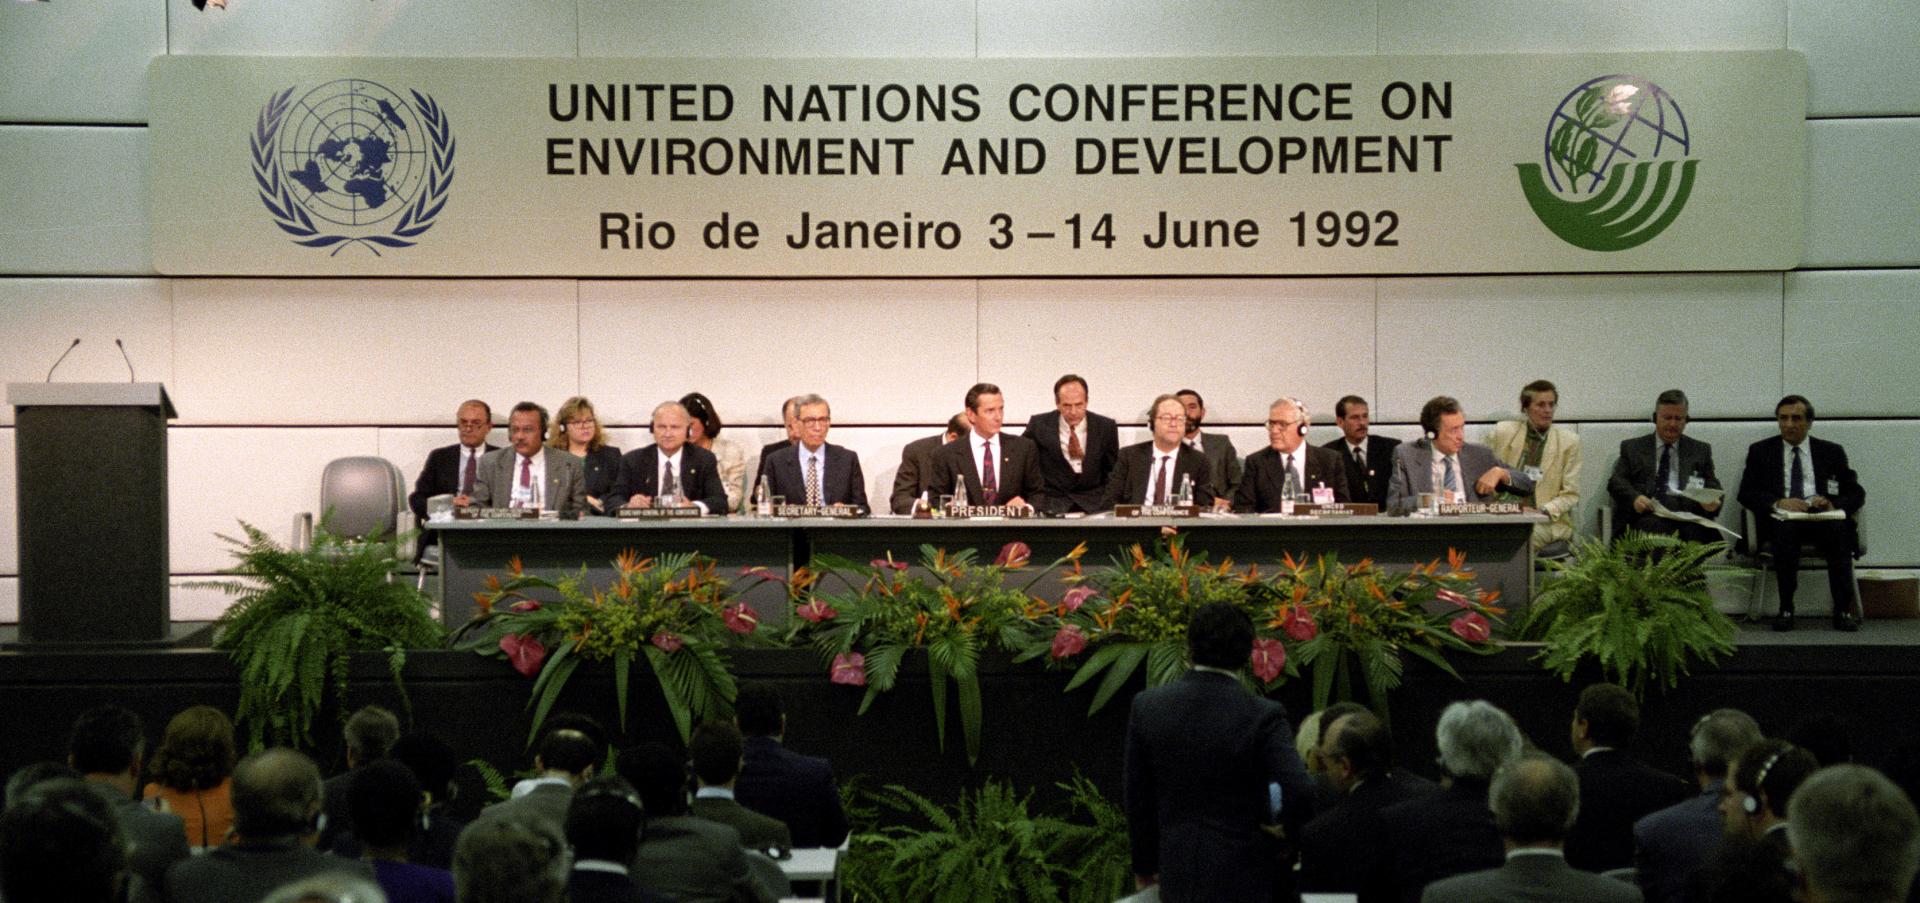 Конференция оон по окружающей среде 1992. Конференция ООН по окружающей среде и развитию Рио-де-Жанейро 1992 г. Конференция ООН по окружающей среде и развитию. Конференция в Рио де Жанейро 1992. Рио де Жанейро 1992 конференция экология.